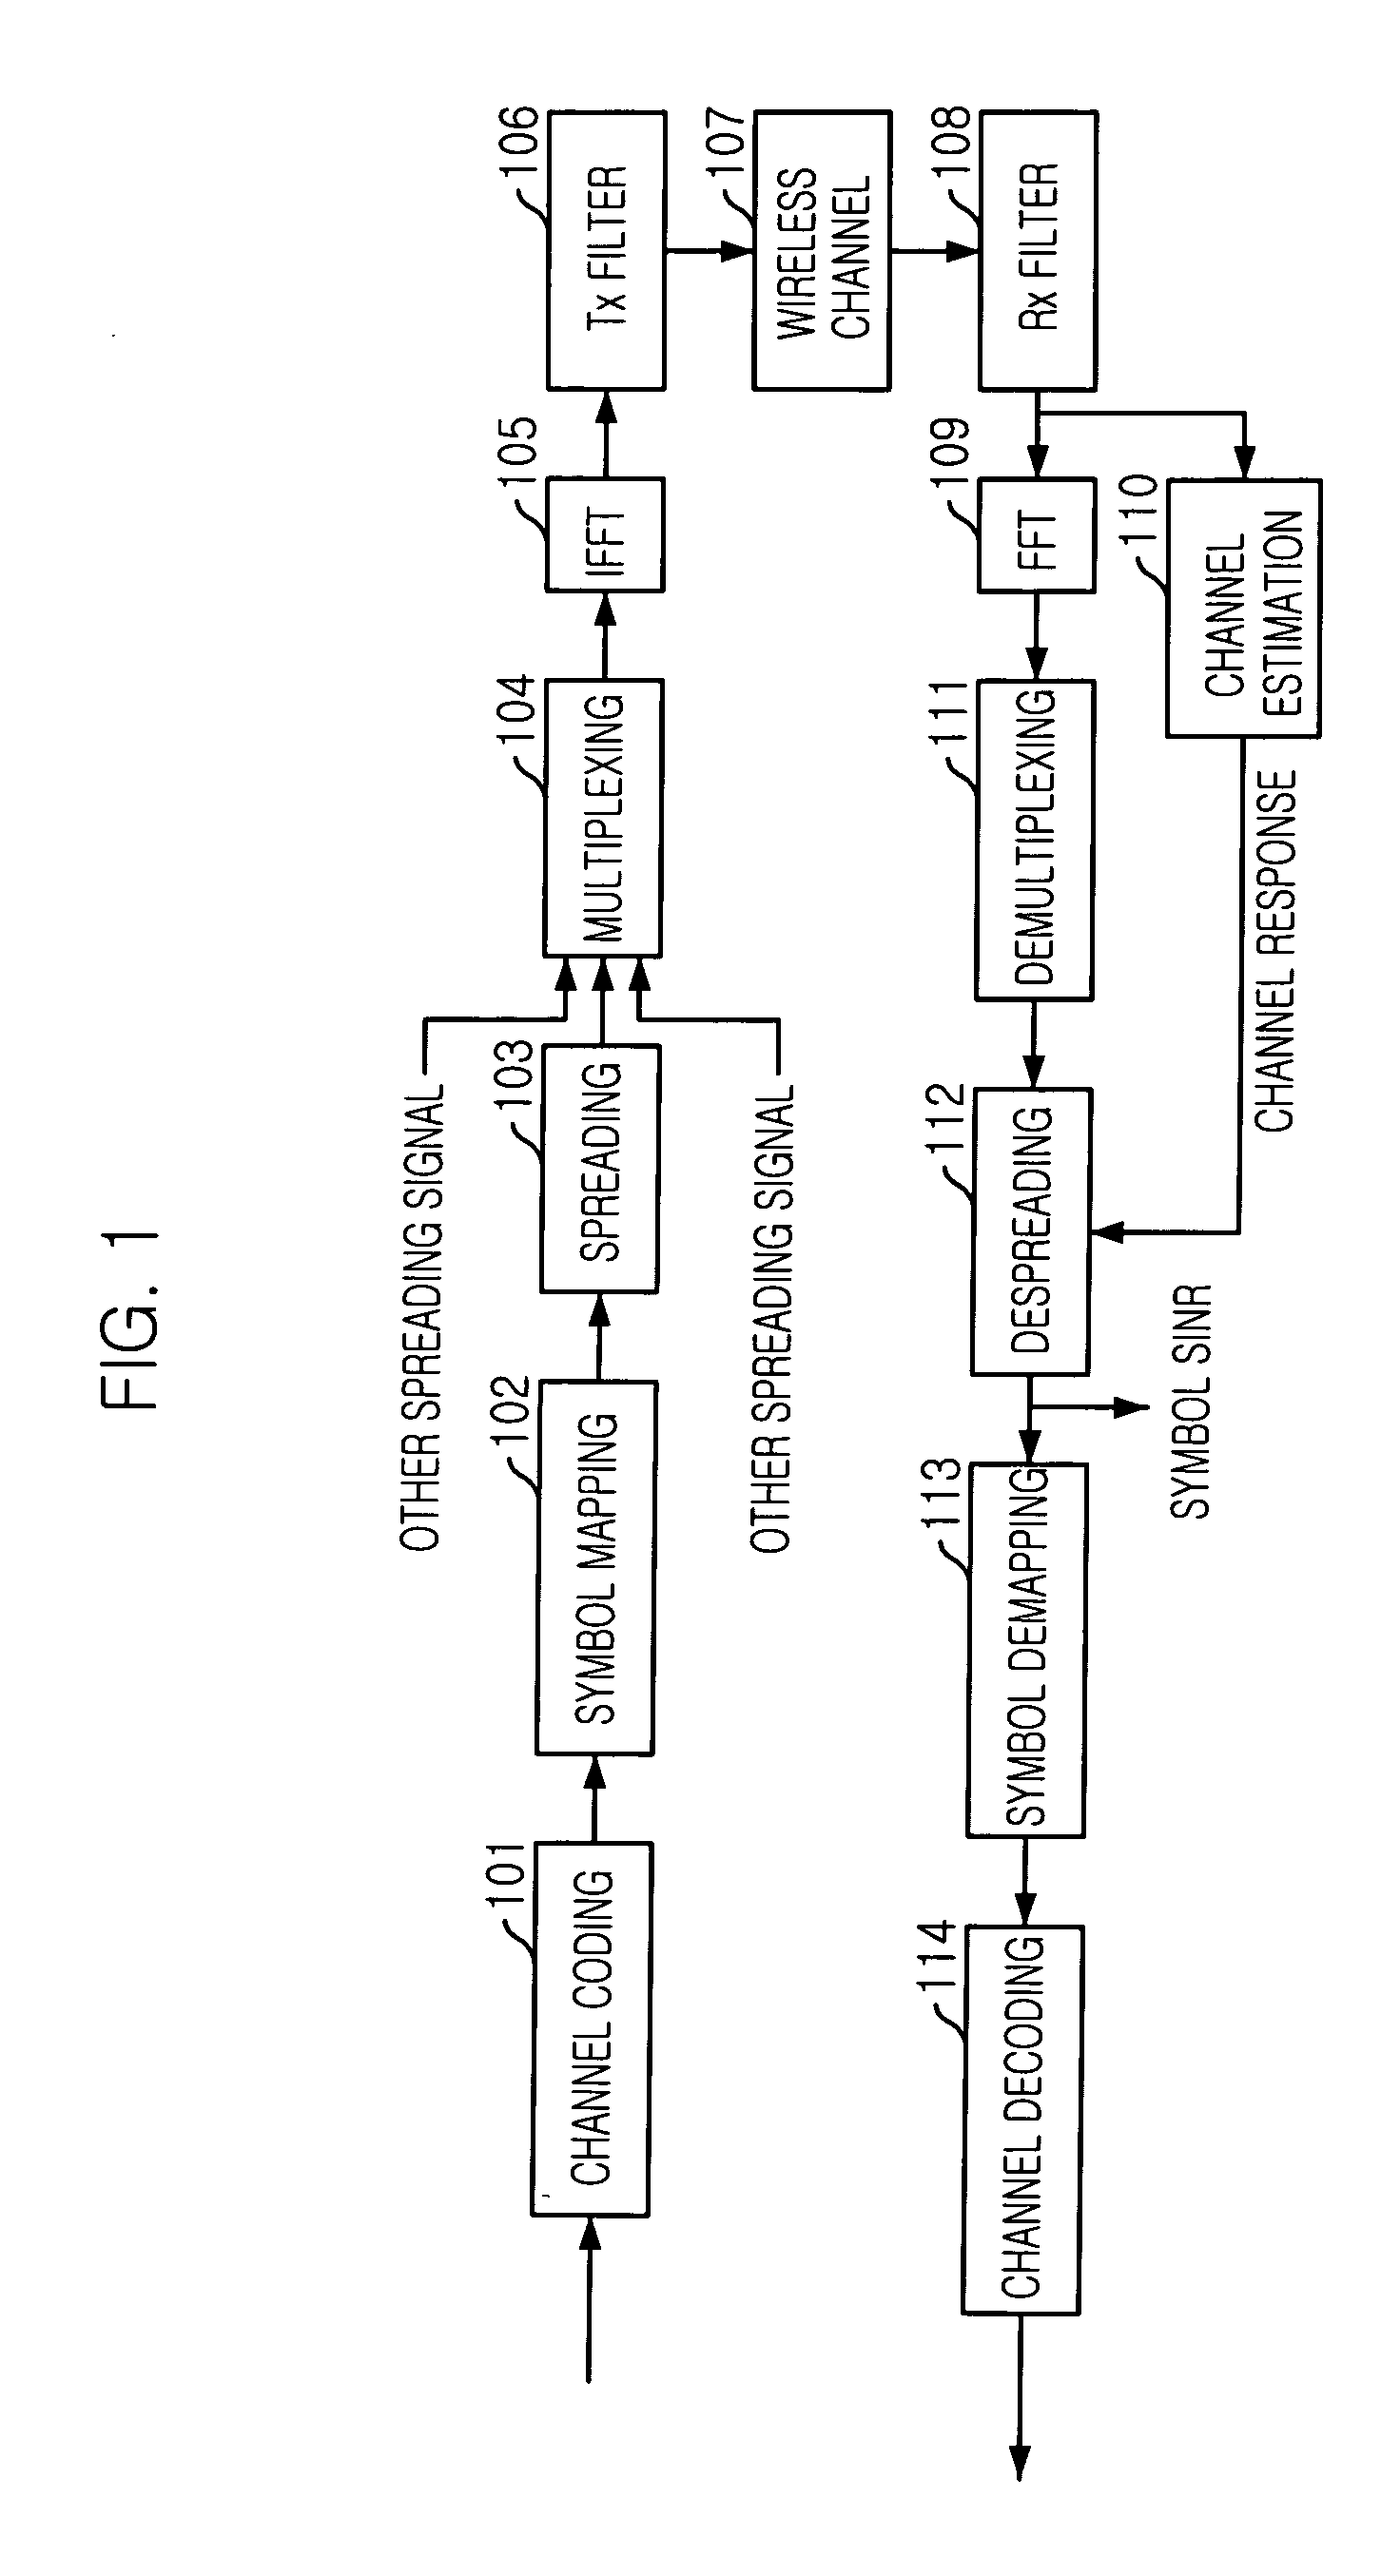 Adaptive downlink packet transmission method in multicarrier CDMA system